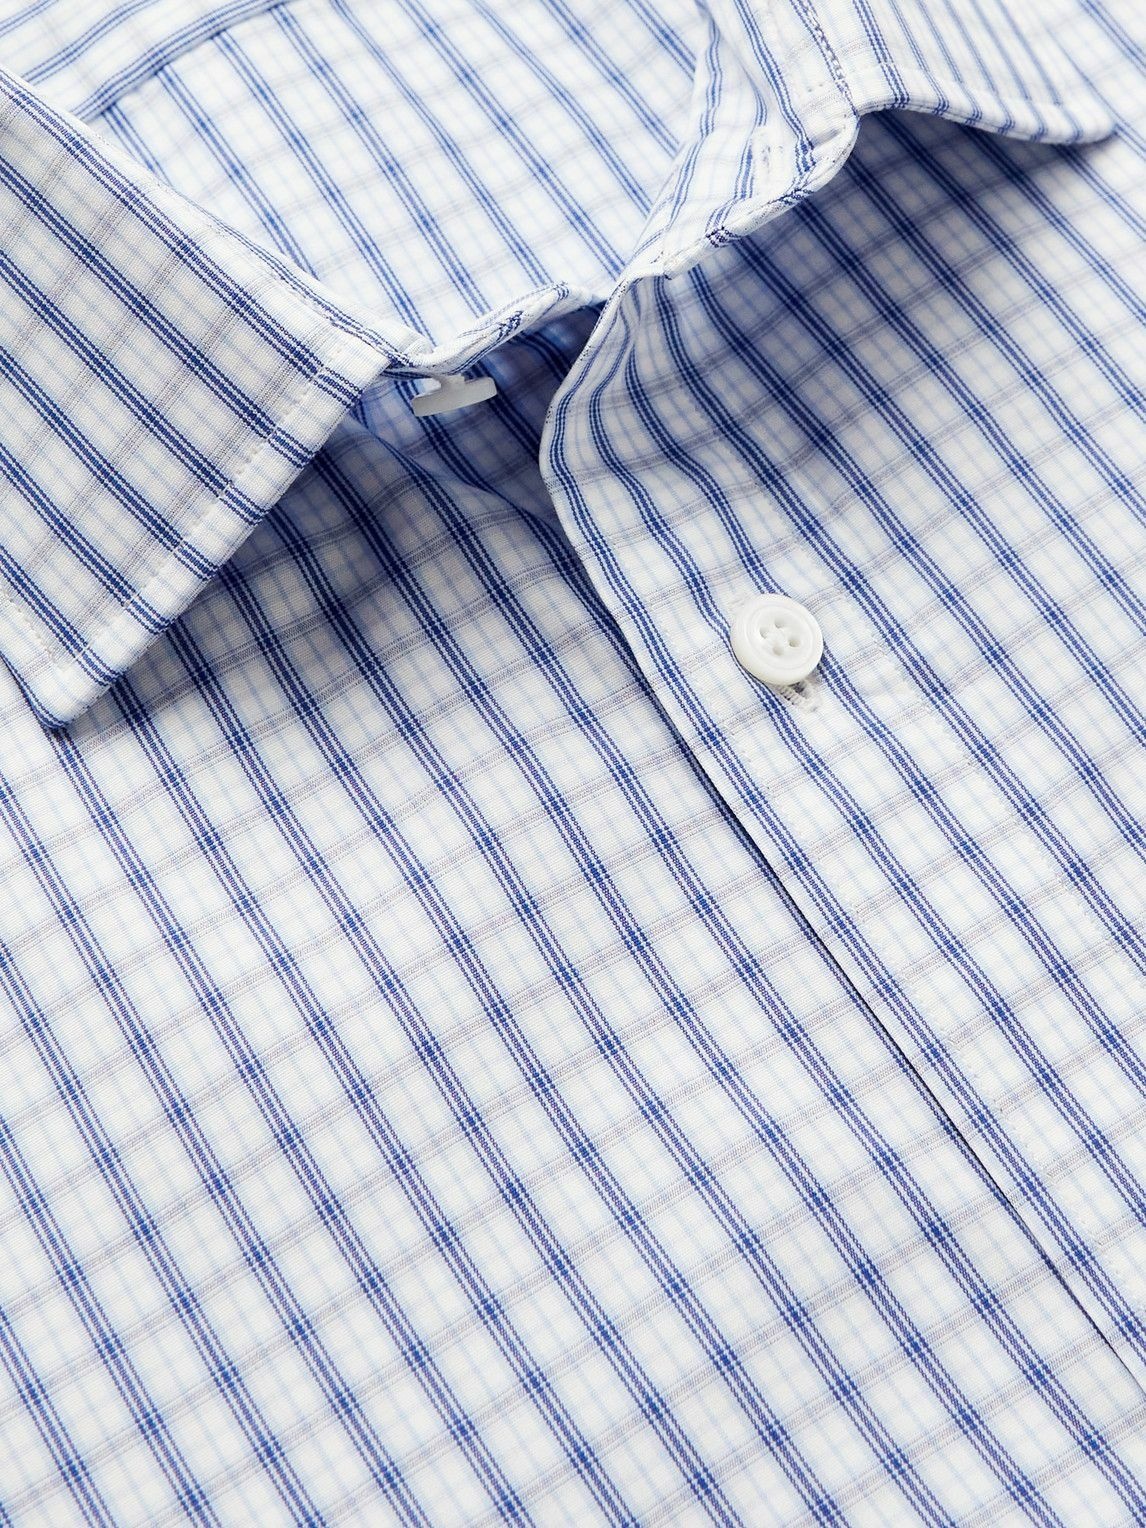 Charvet - Checked Cotton-Poplin Shirt - Blue